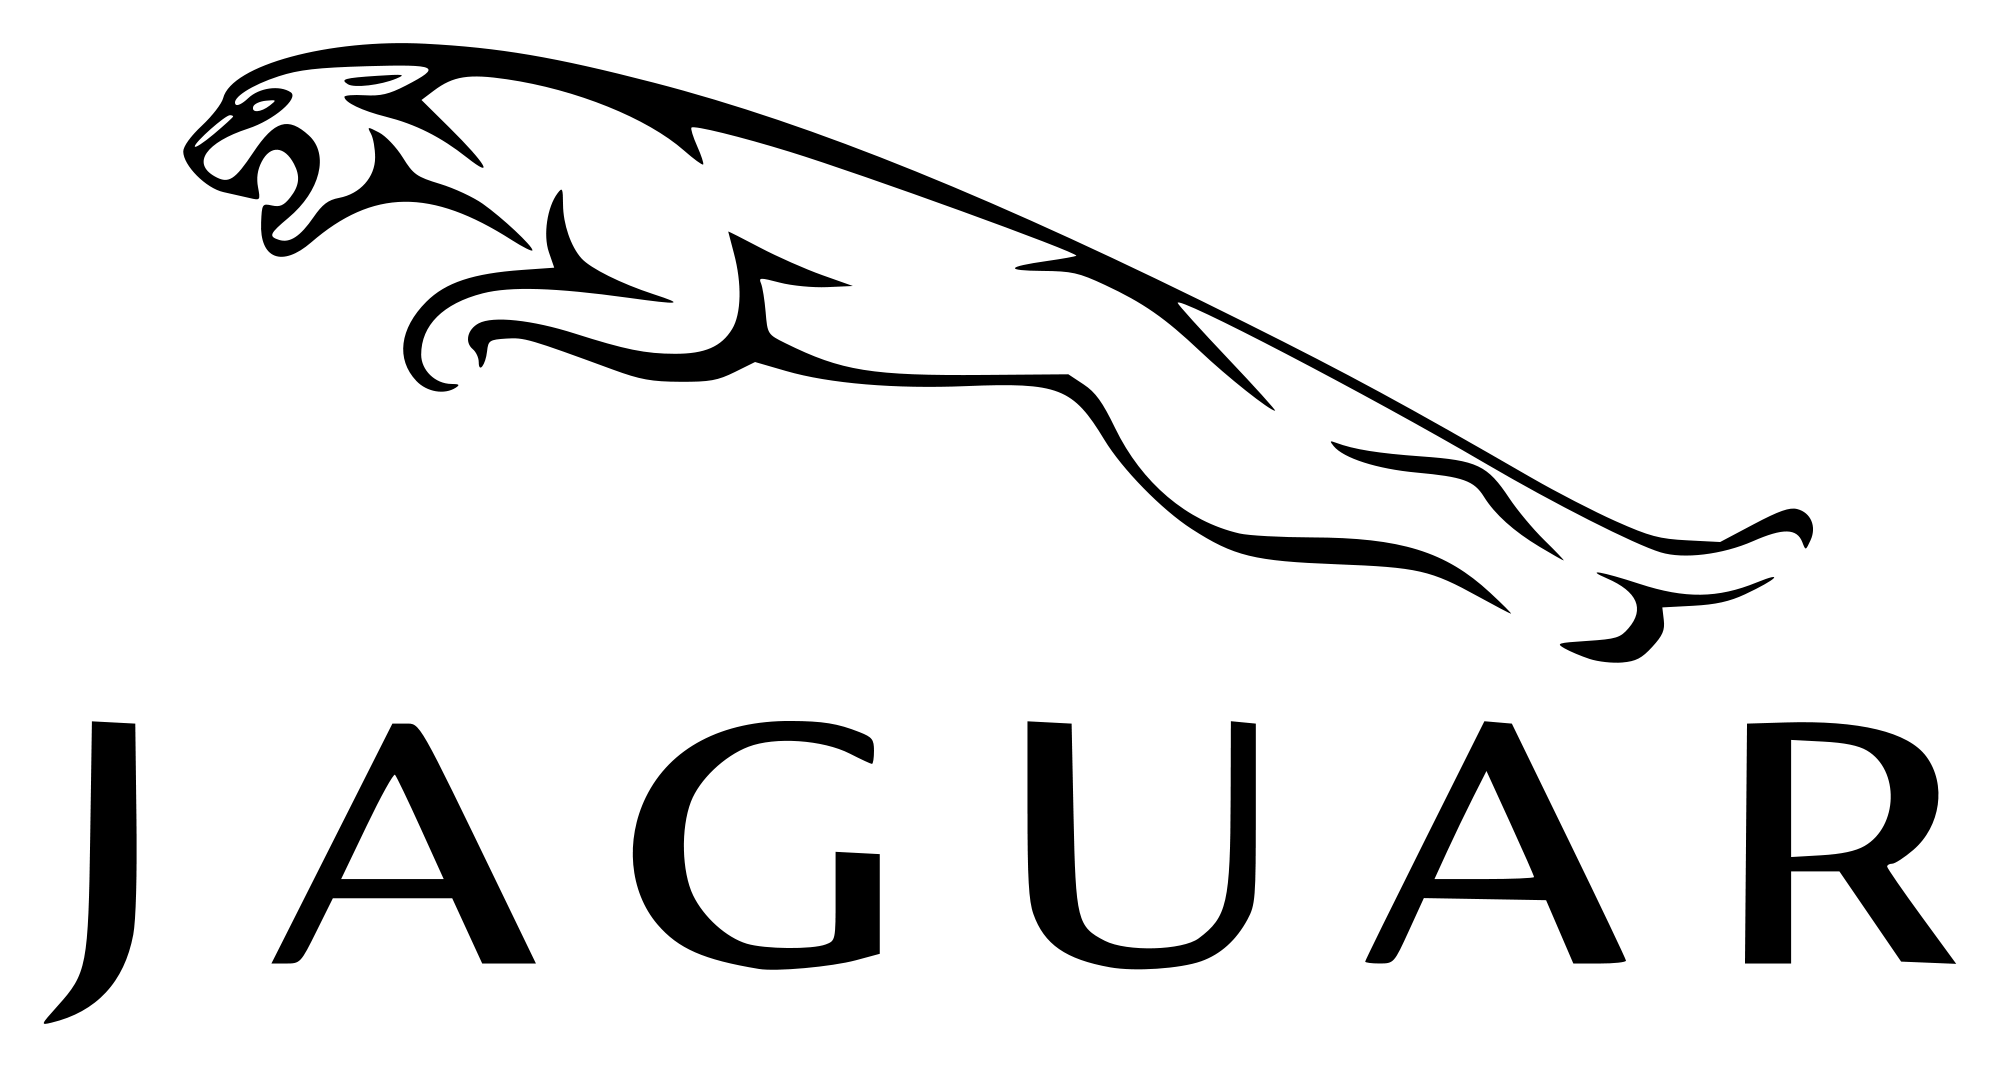 Animals On Red Car Logo - Jaguar Logo, Jaguar Car Symbol Meaning and History | Car Brand Names.com